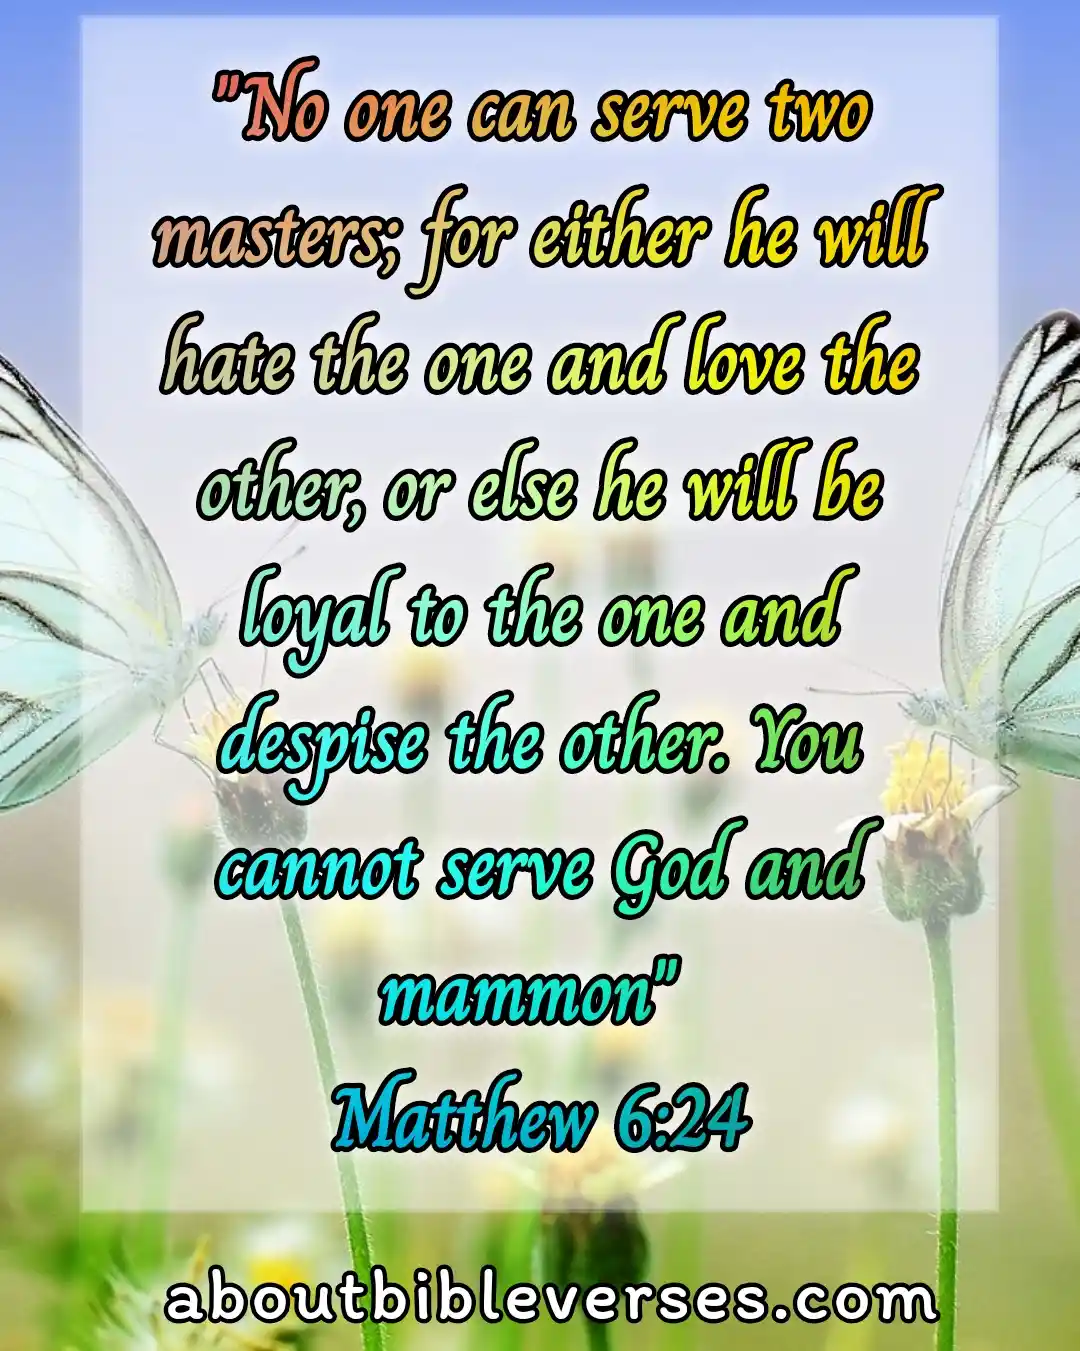 Verses Do Not Love Money (Matthew 6:24)